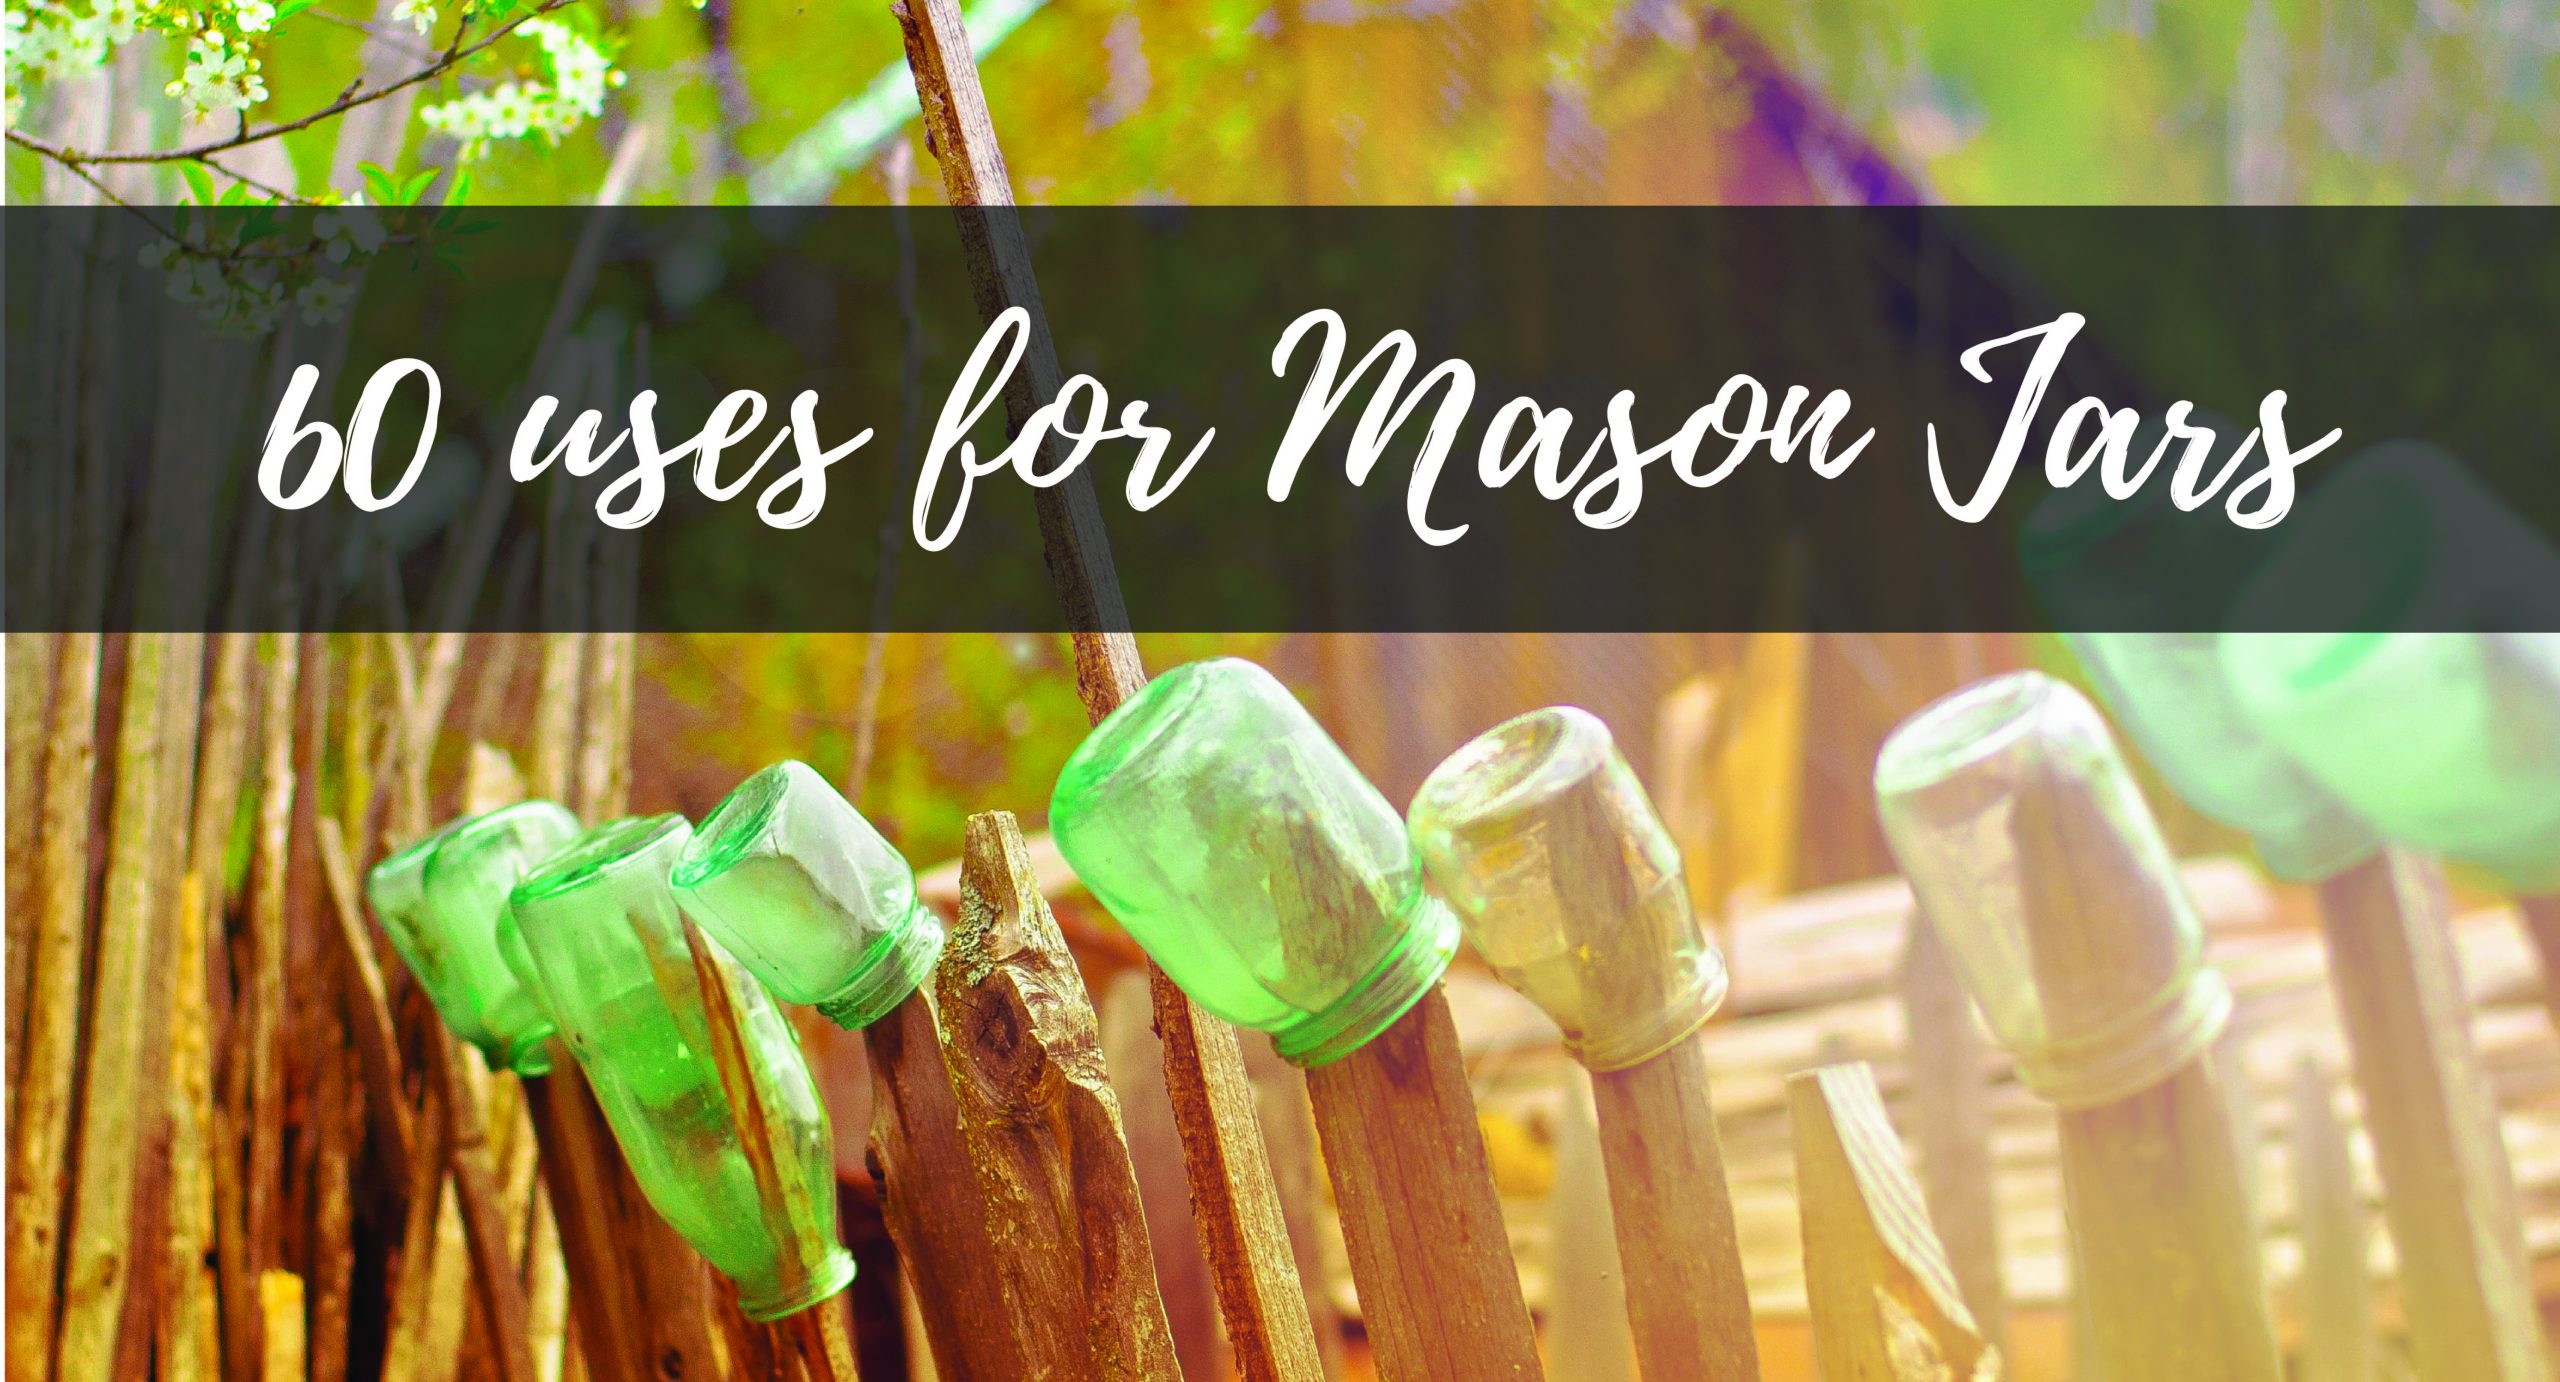 60 Uses For Mason Jars, Cotton Creations